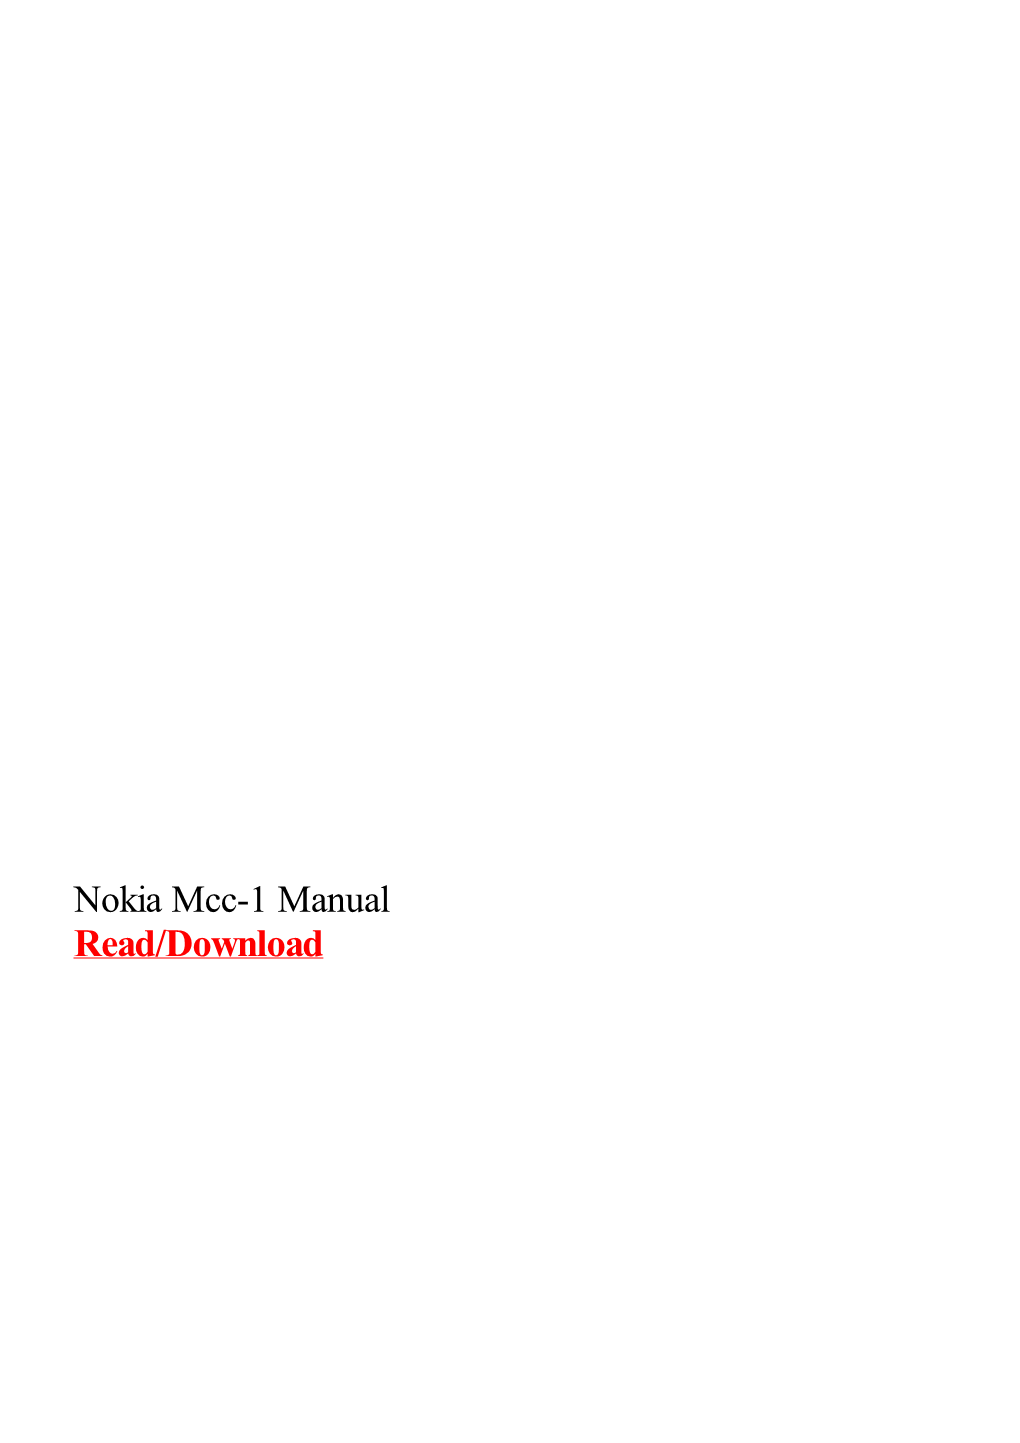 Nokia Mcc-1 Manual